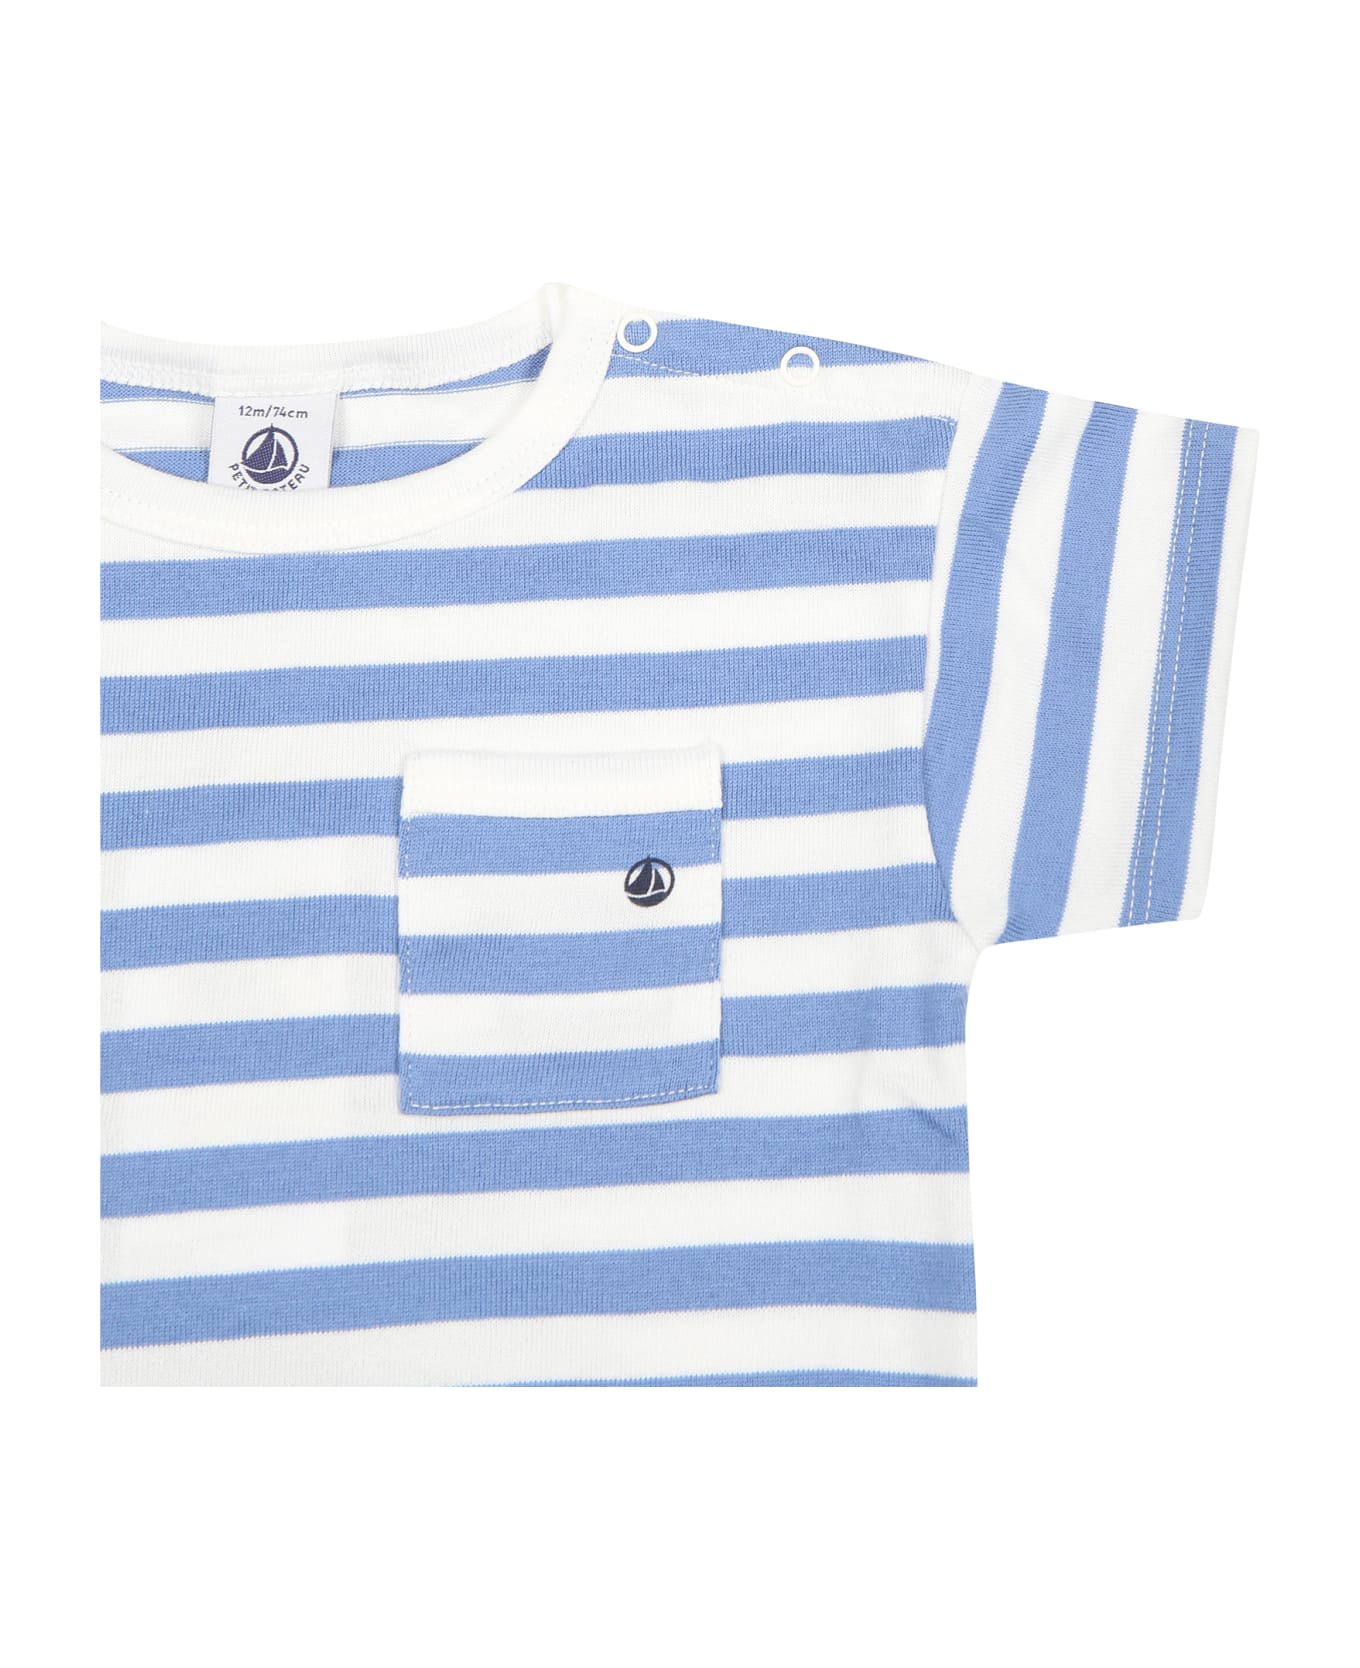 Petit Bateau Light Blue T-shirt For Baby Boy With Stripes - Light Blue